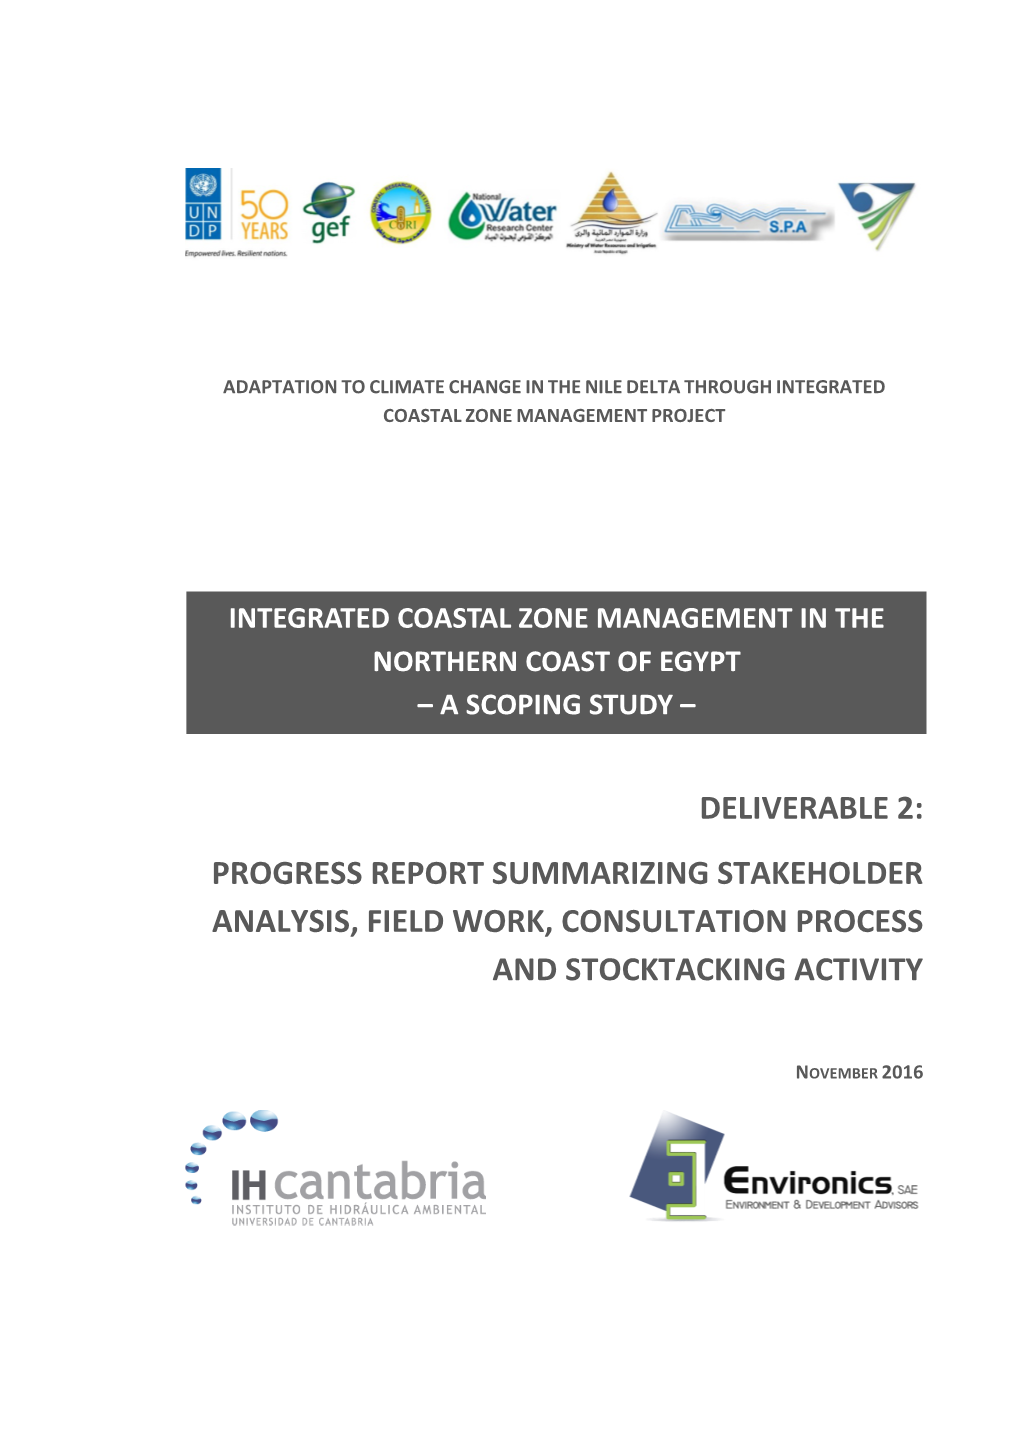 Progress Report Summarizing Stakeholder Analysis, Field Work, Consultation Process and Stocktacking Activity